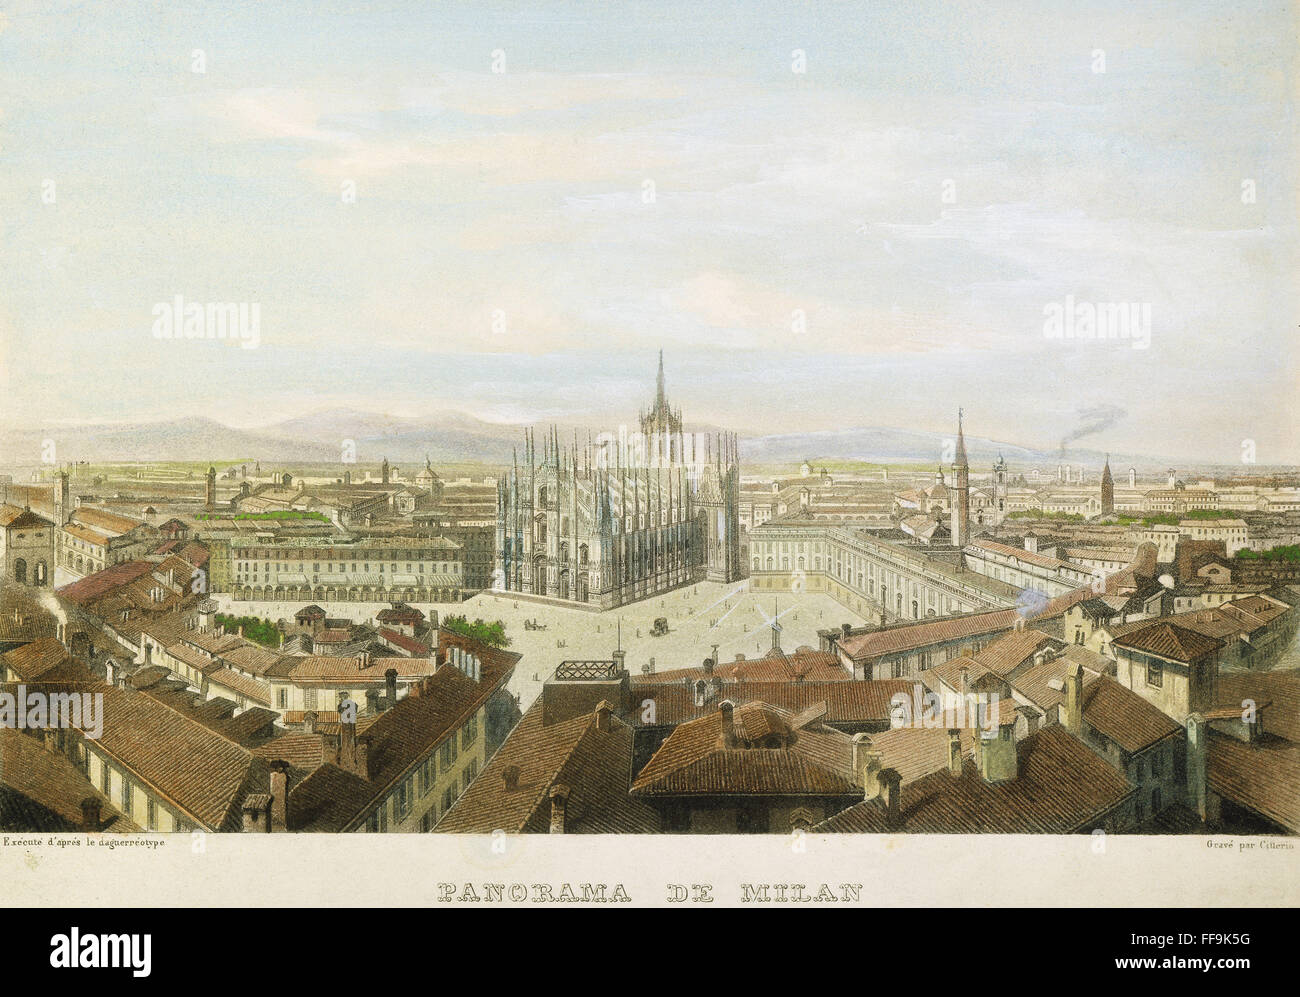 MILAN, ITALIE, c1860. NPanoramic /Avis de Milan, Italie : gravure couleur italienne, c1860. Banque D'Images